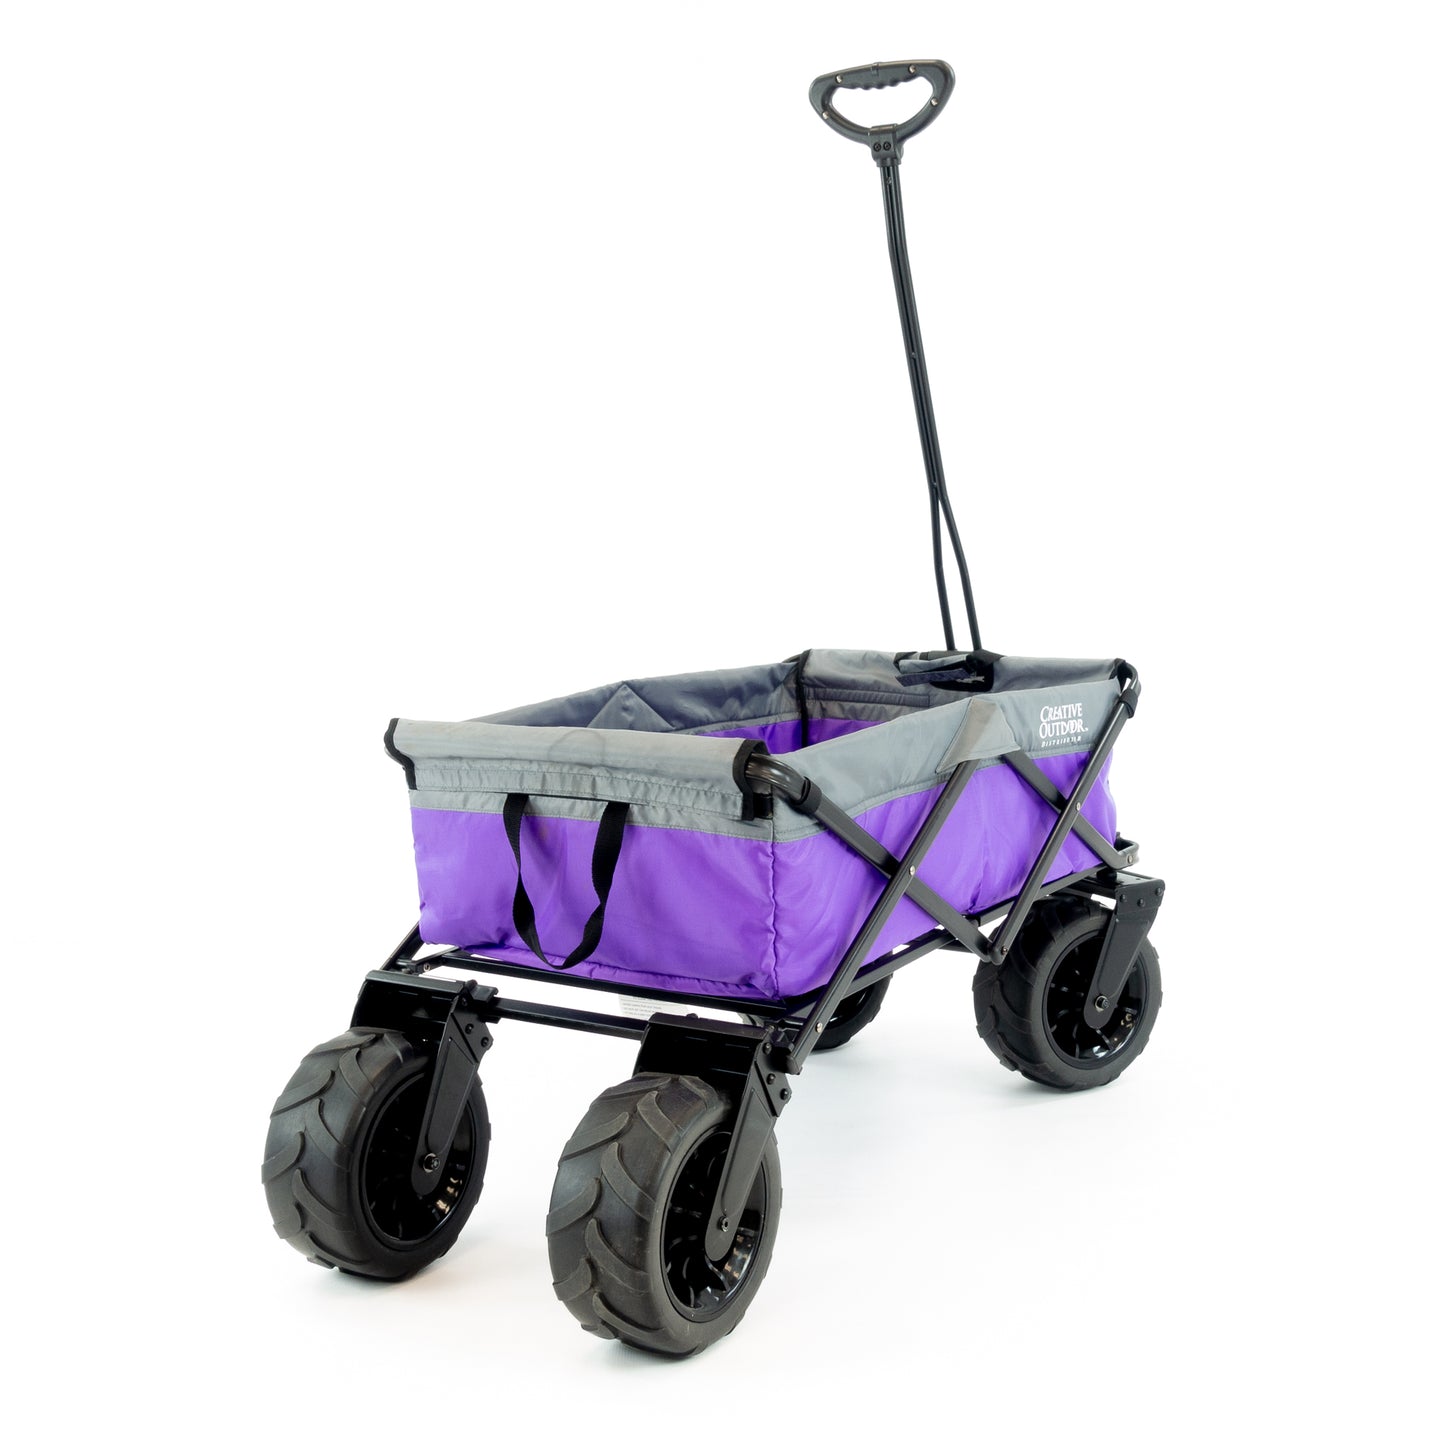 beach-hauler-xxl-all-terrain-folding-wagon-purple-gray